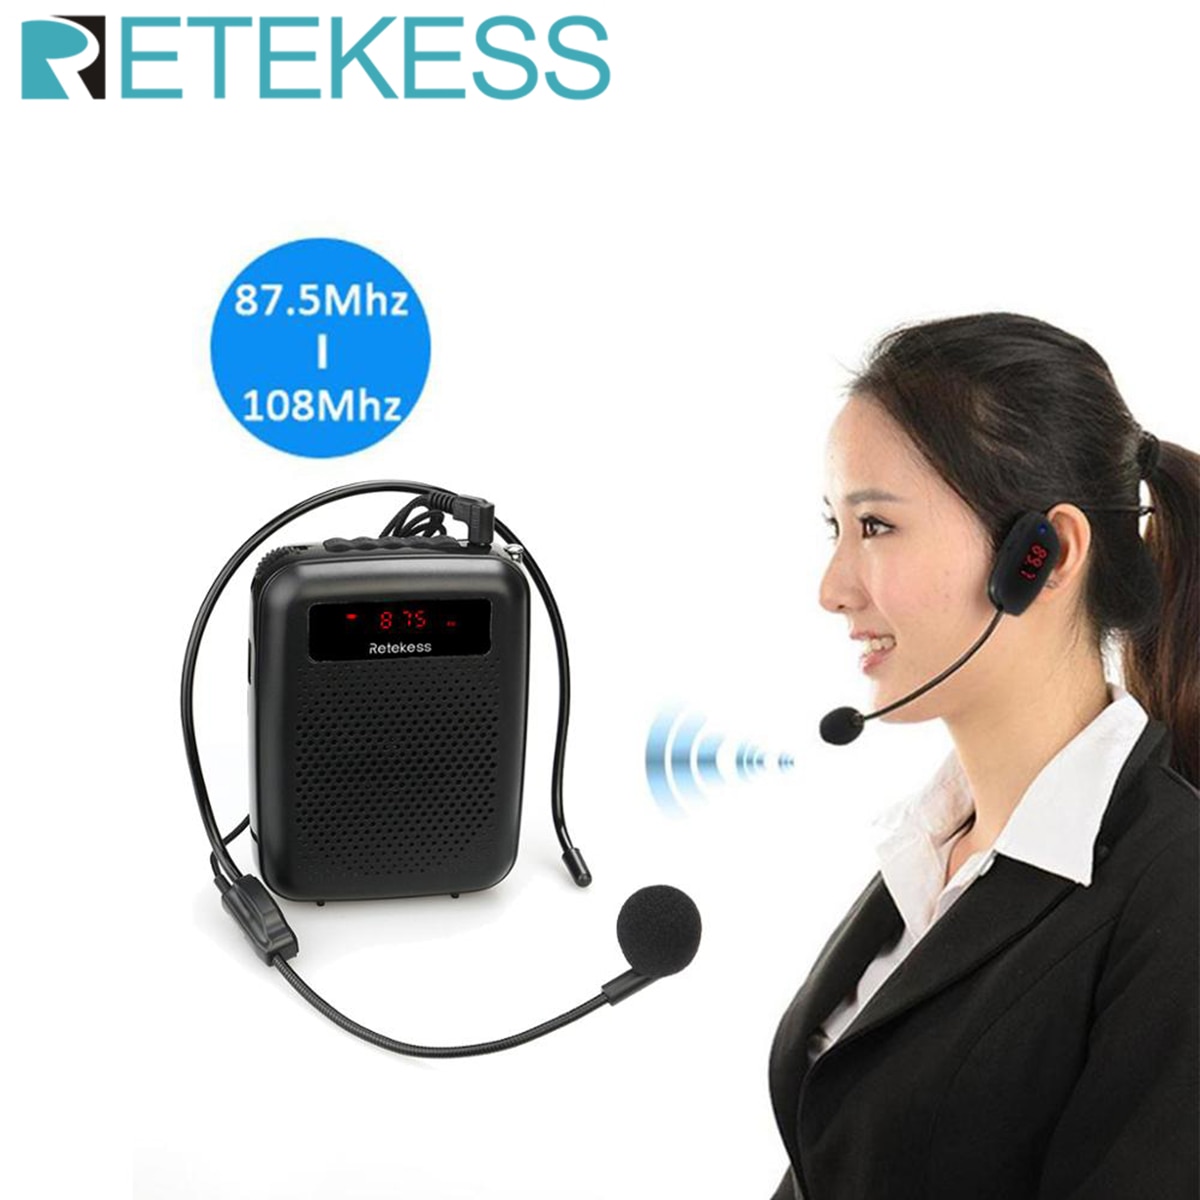 RETEKESS PR16R Megaphone Portable Voice Amplifier Teacher Microphone Speaker 12W FM Recording With Mp3 Player FM Radio Recorder